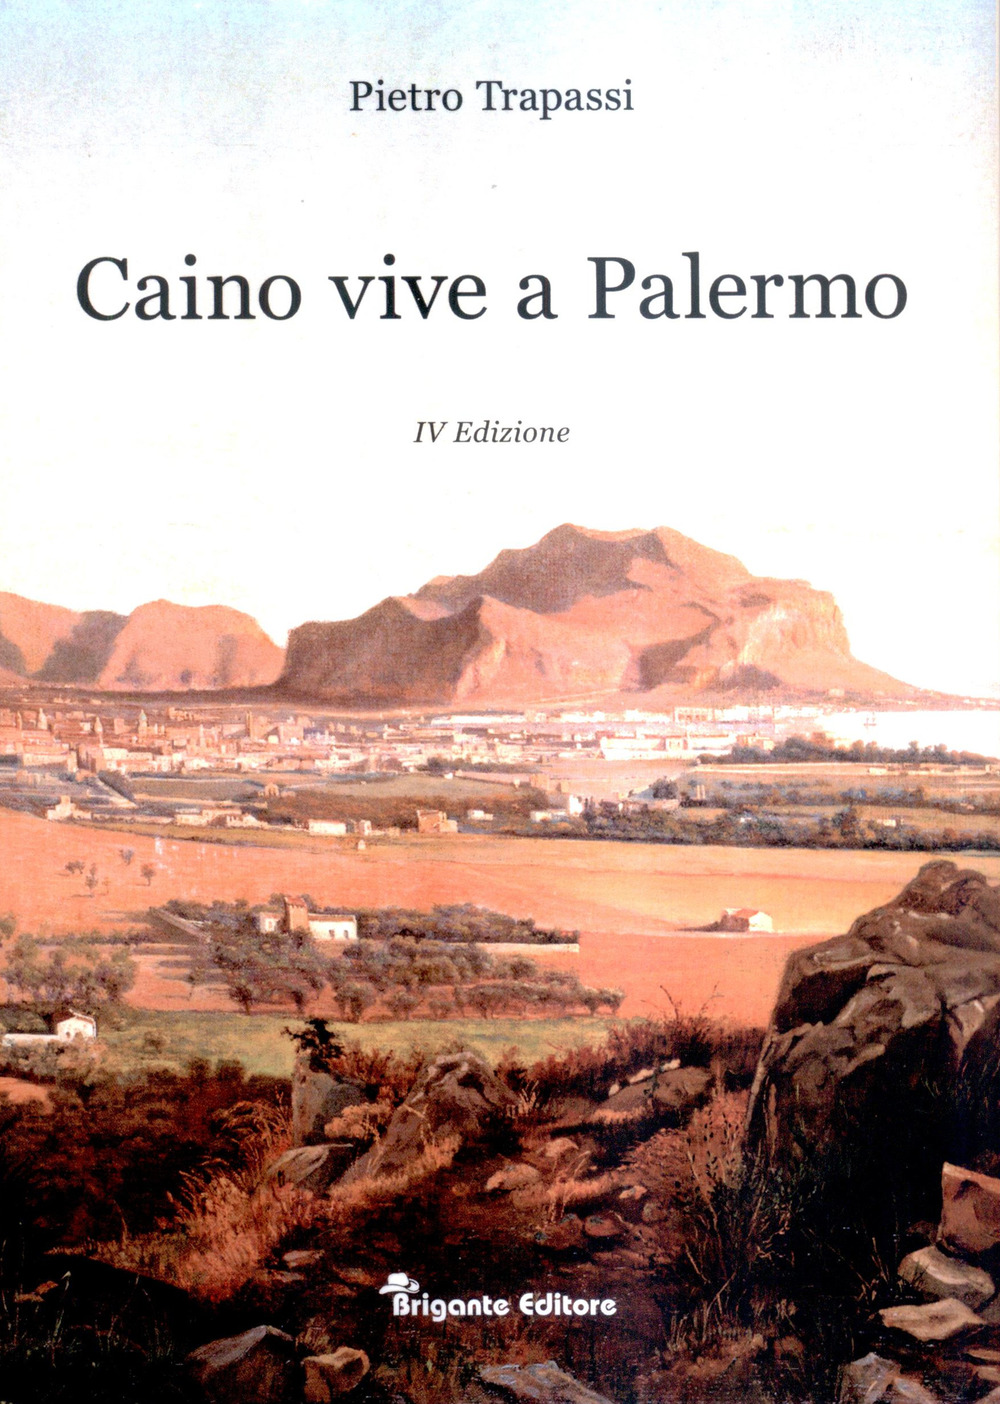 Caino vive a Palermo